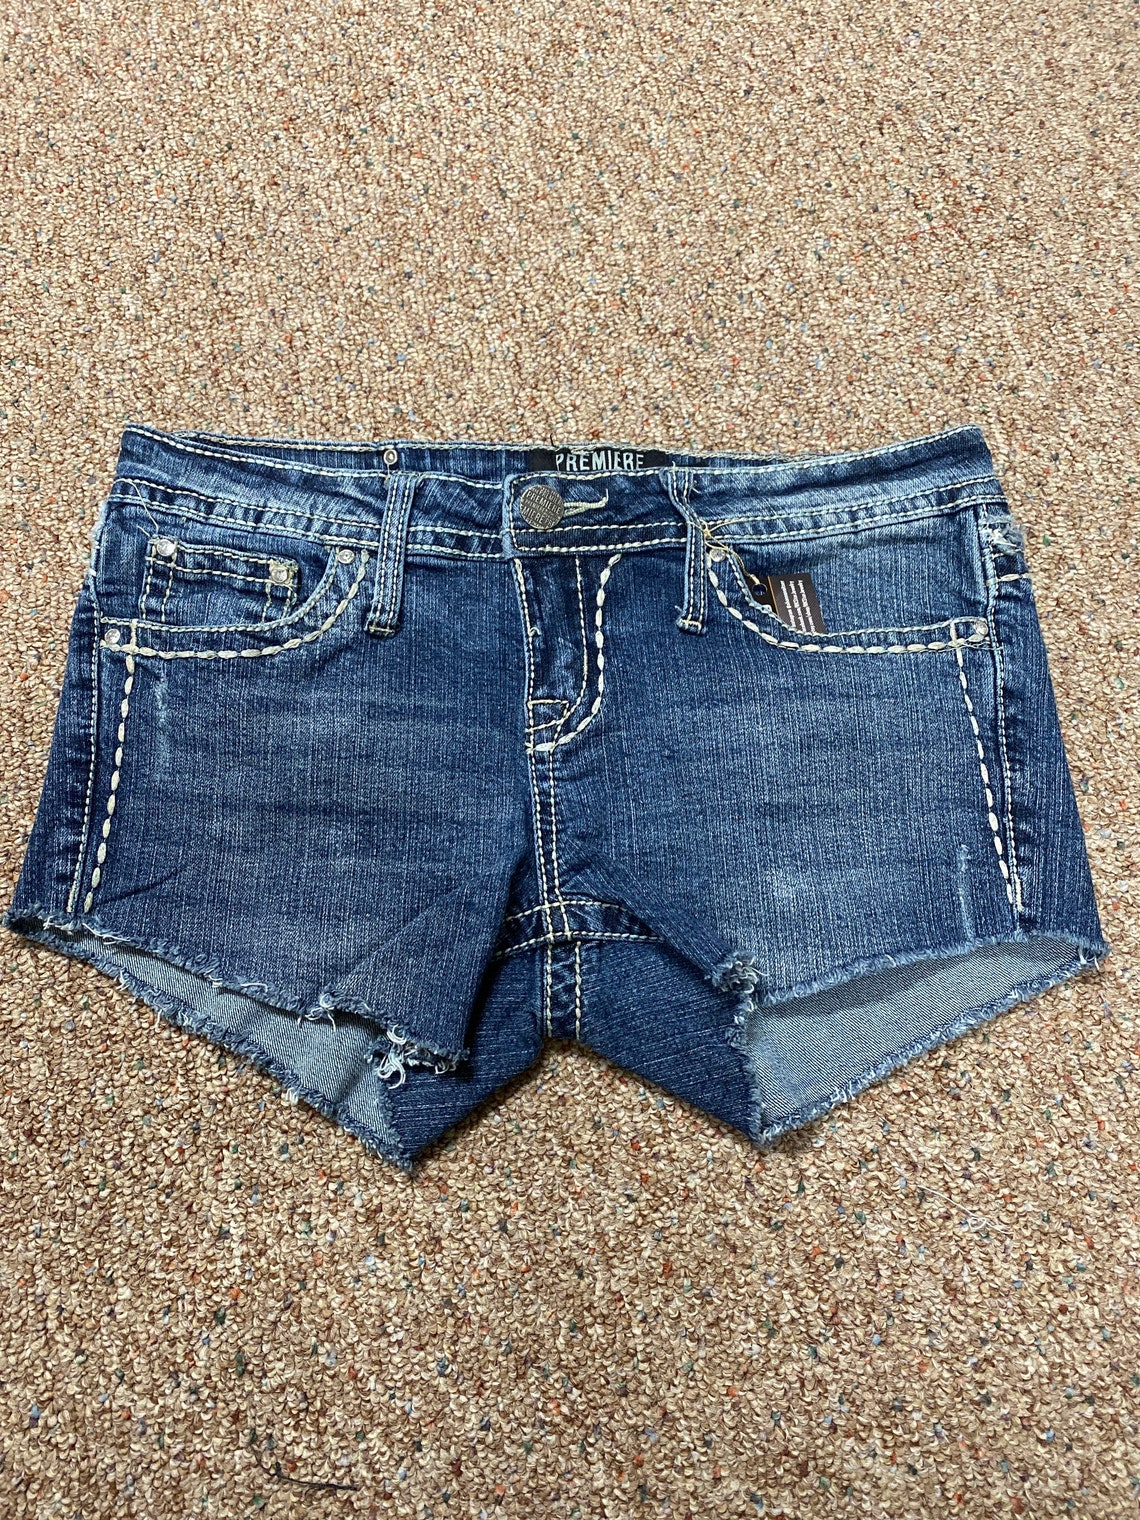 Size 7/8 Booty Bling Jean Cutoff Shorts Denim Shorts Womens | Etsy